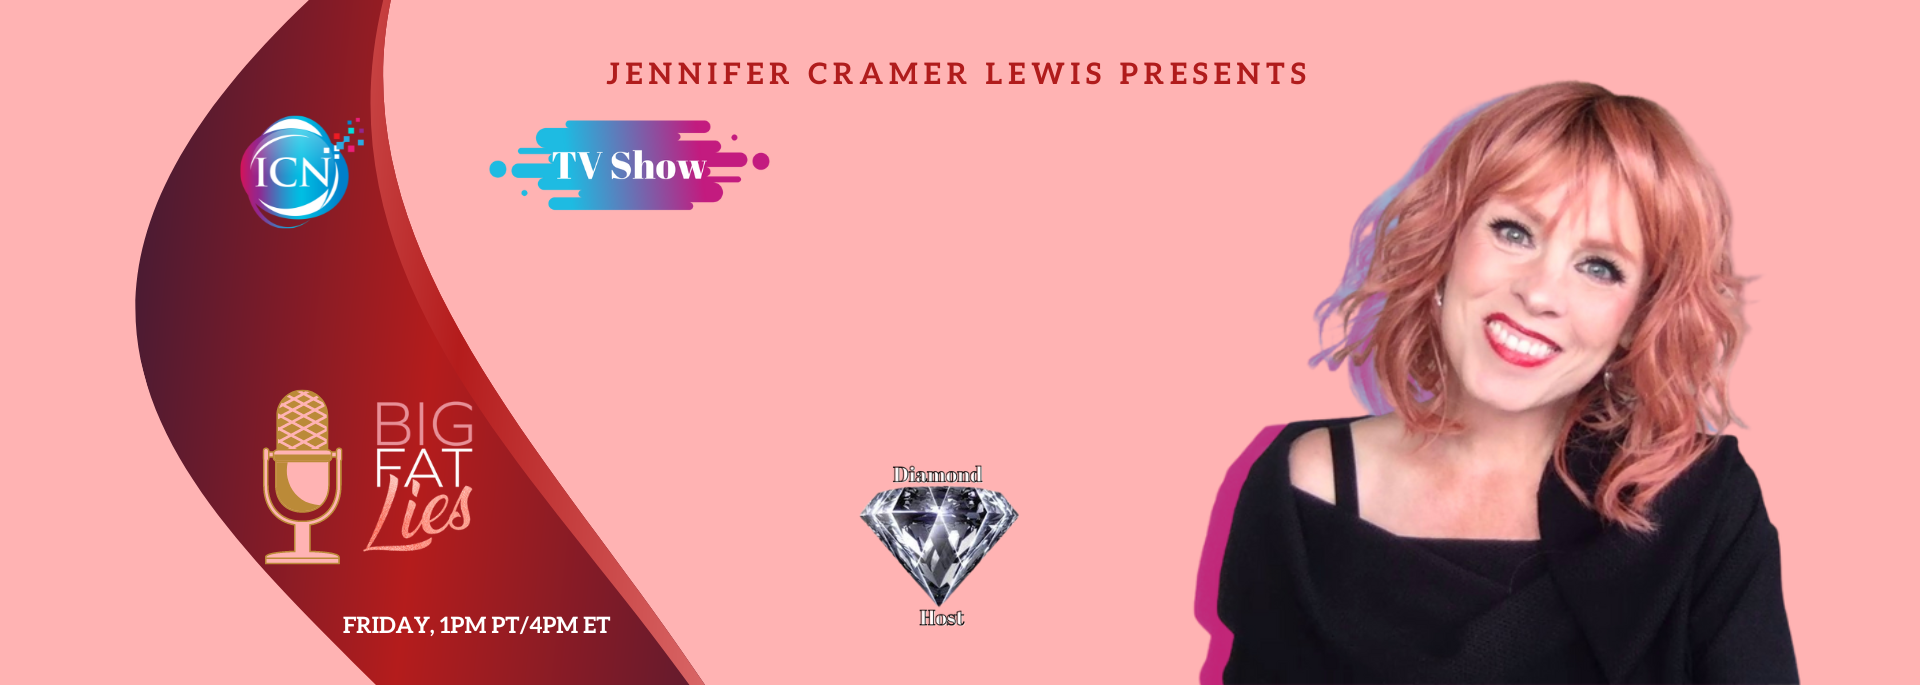 Big Fat Lies With Jennifer Cramer Lewis channel